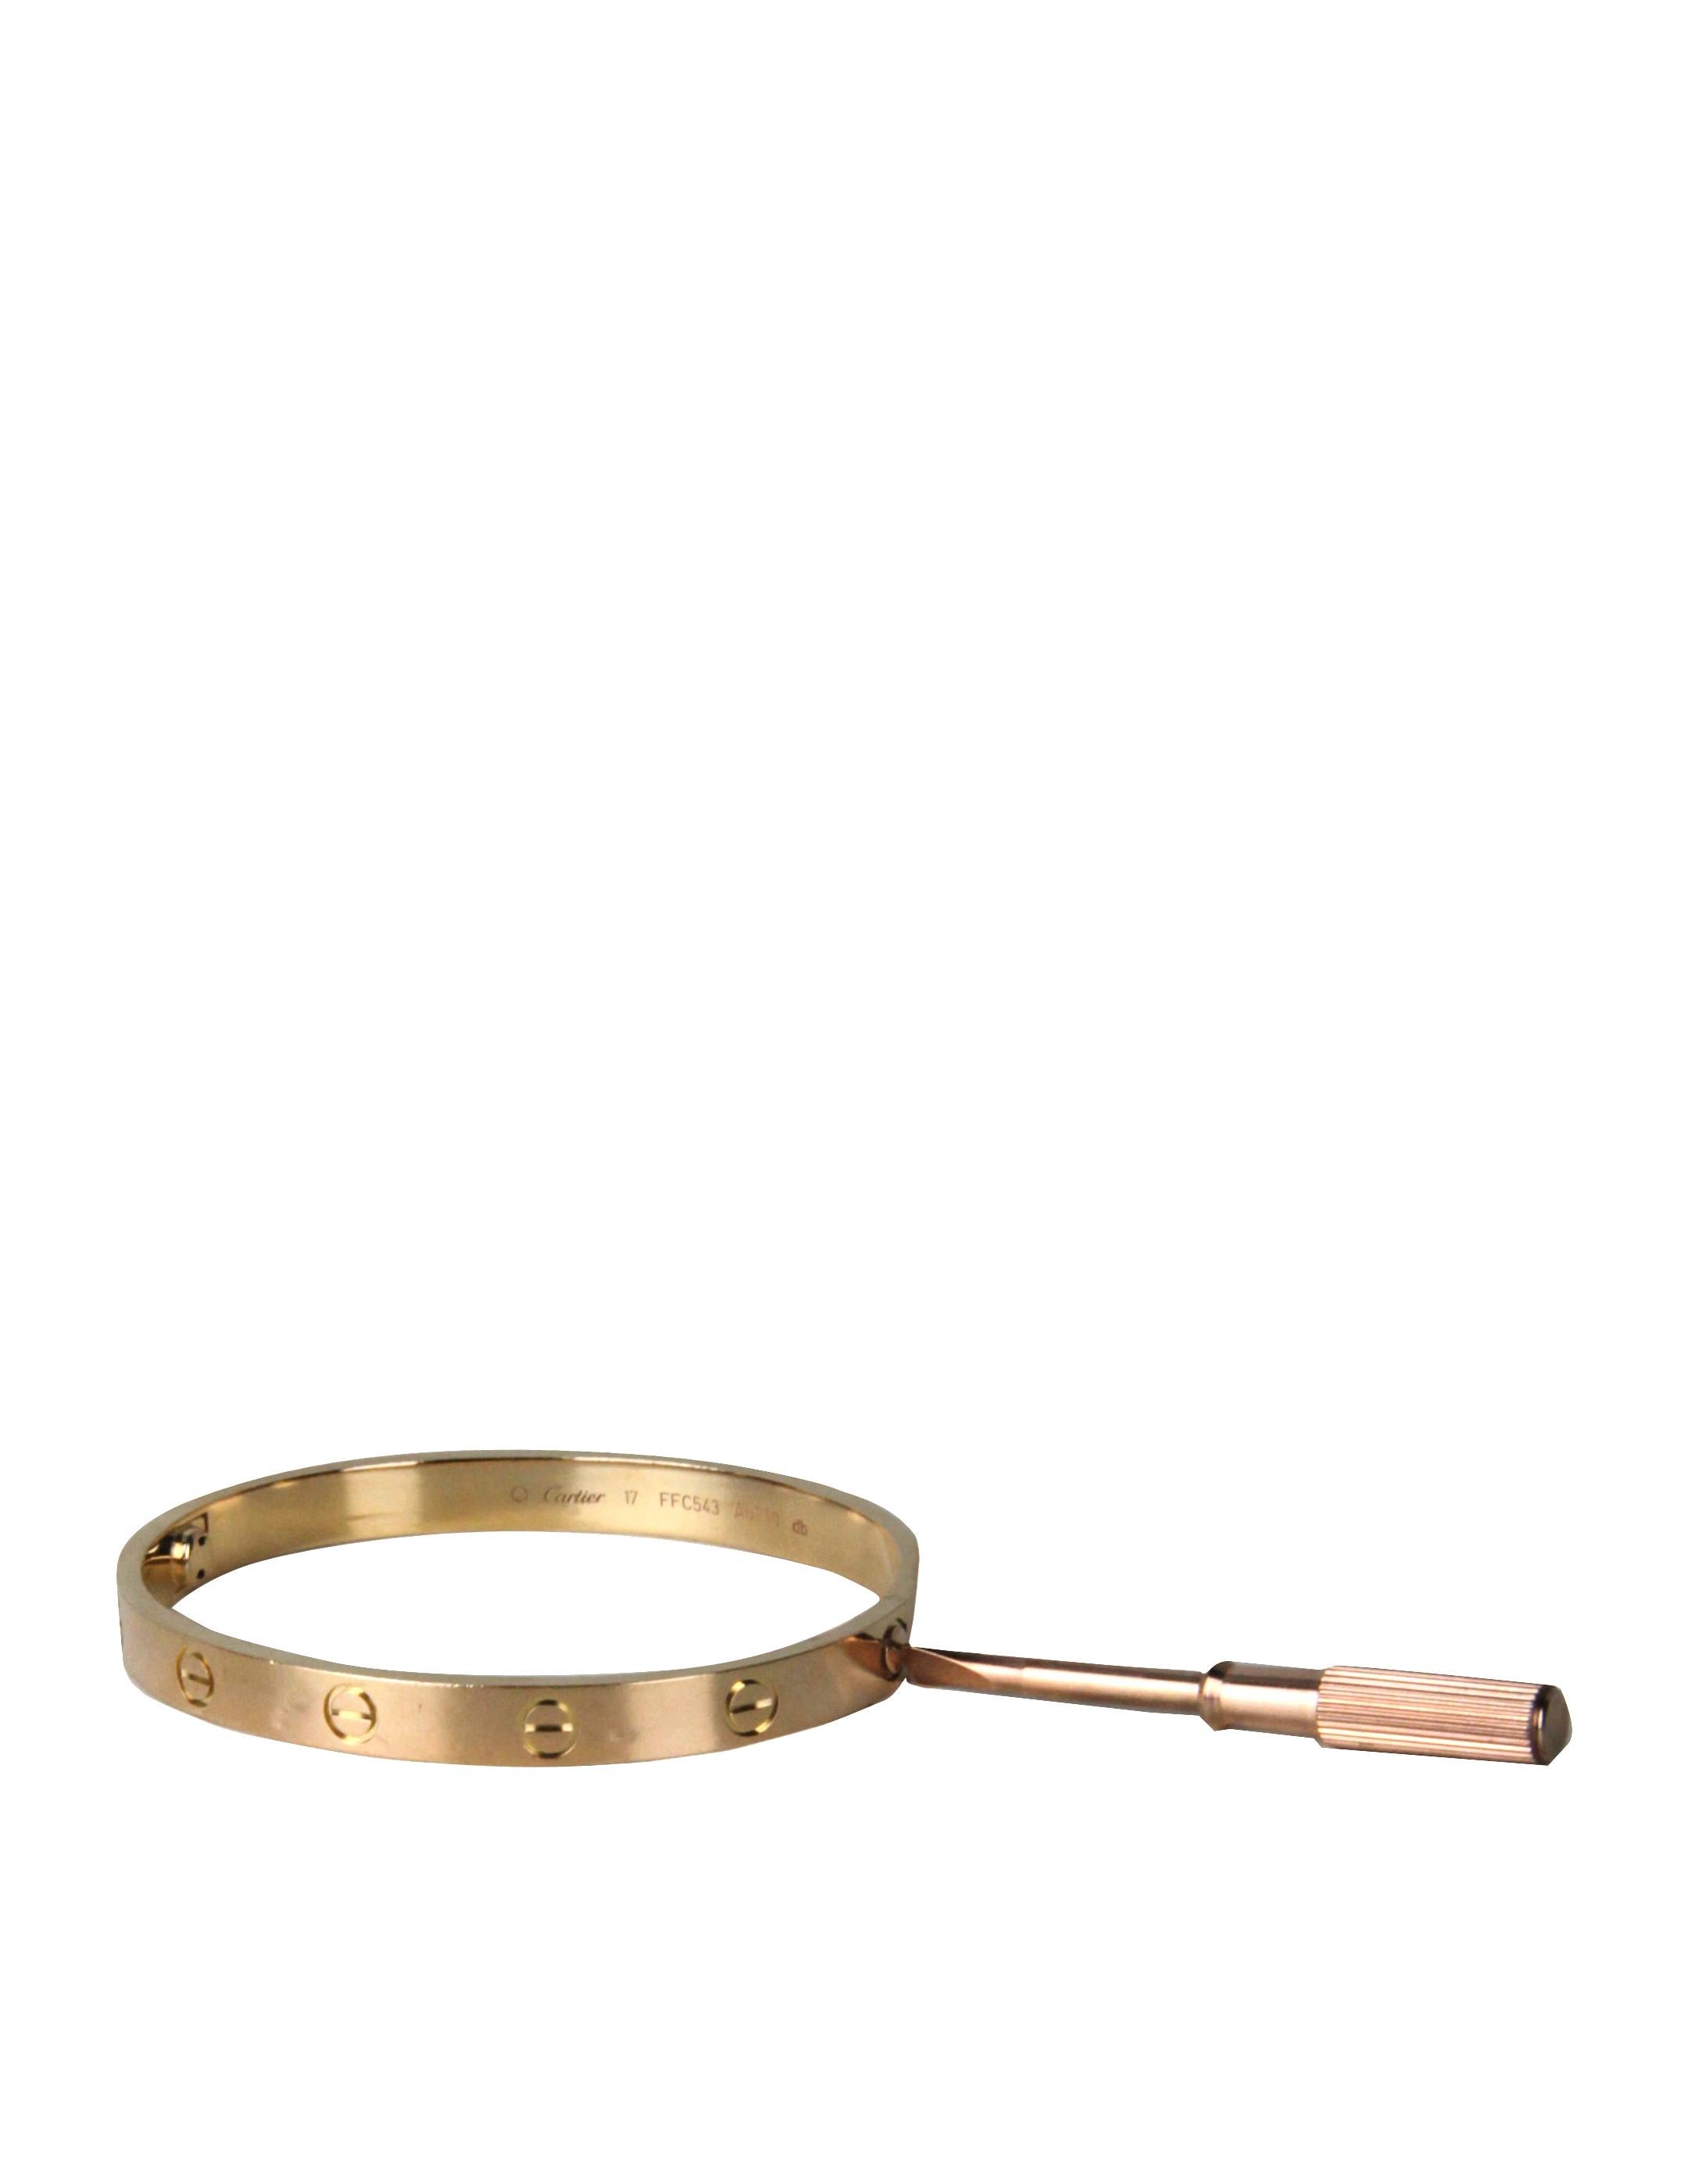 Contemporary Cartier 18k Rose Gold LOVE Bangle Bracelet sz 17 w/ Certificate For Sale